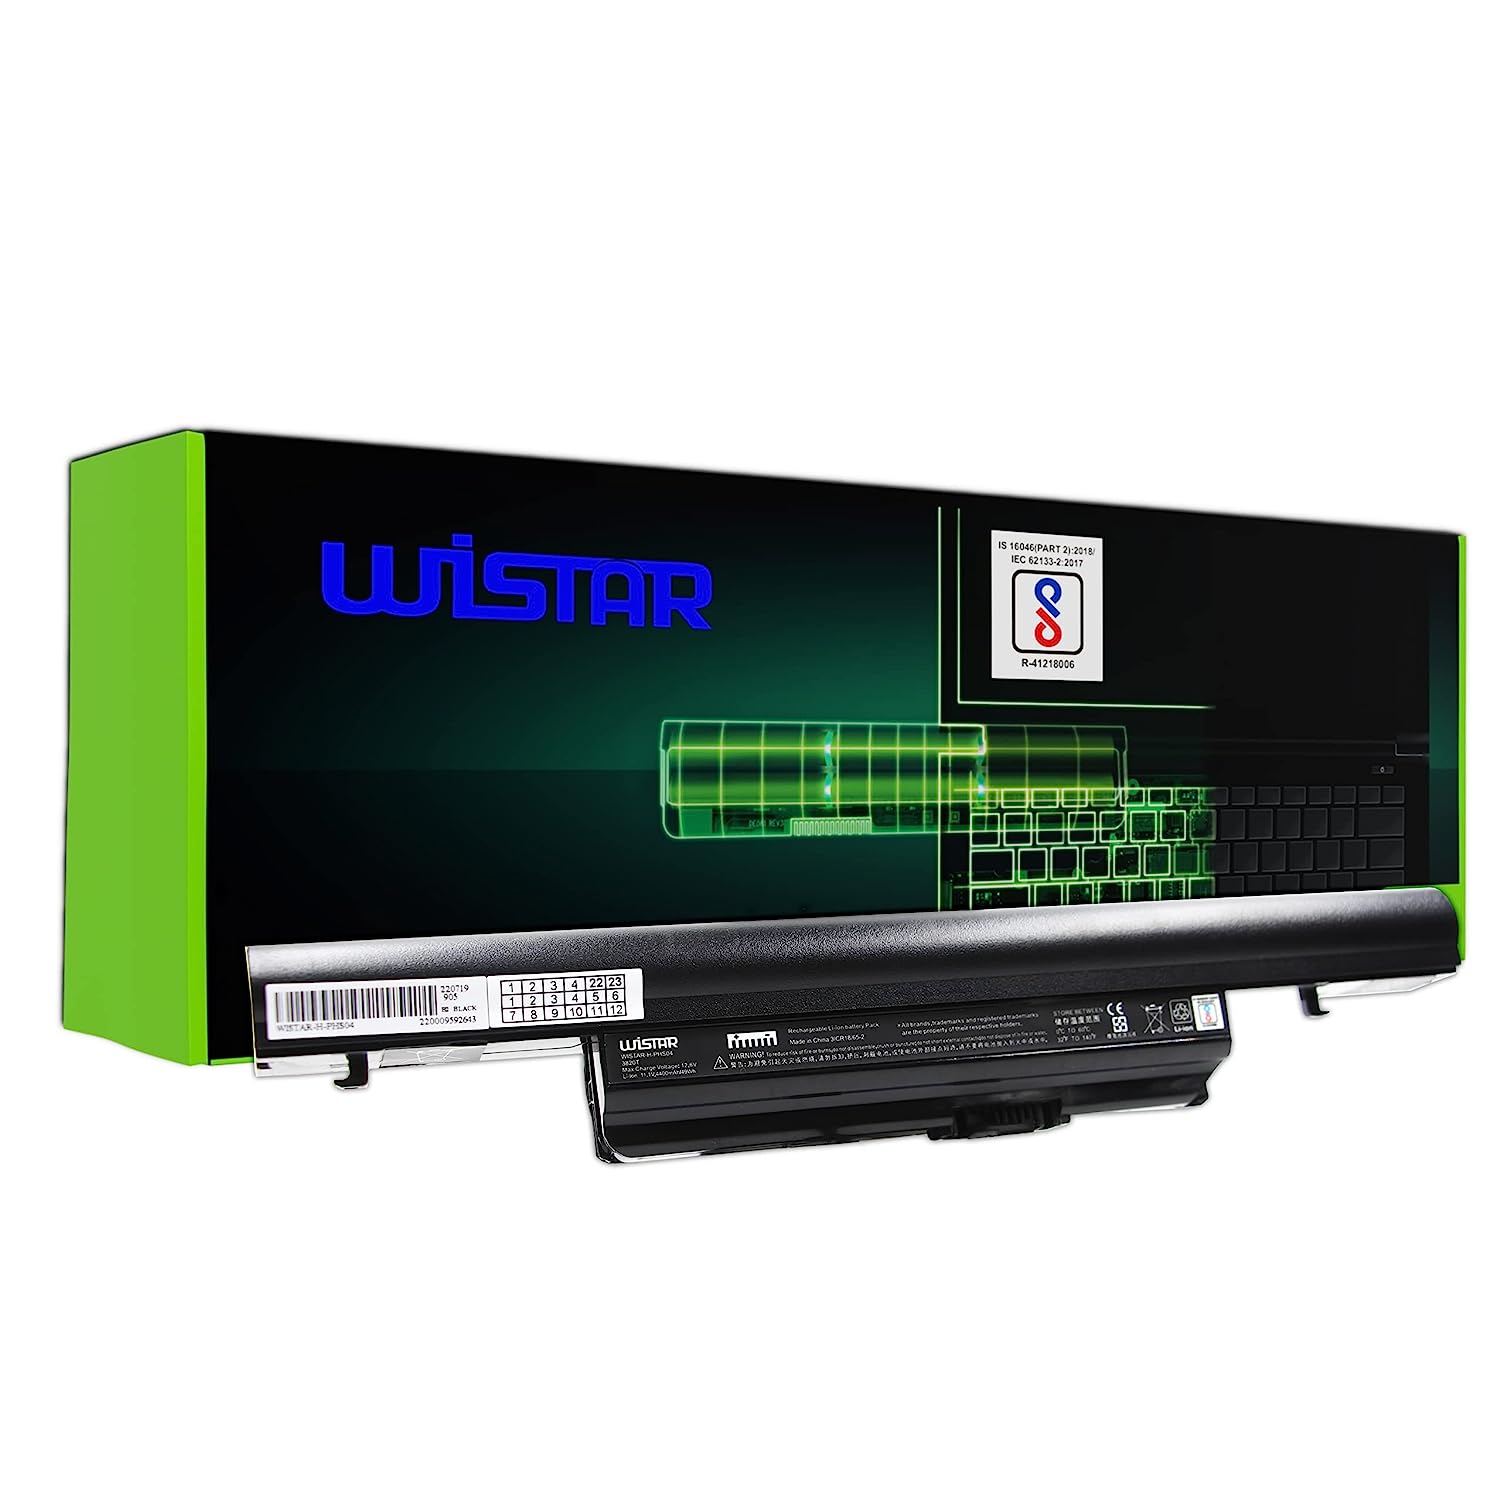 WISTAR Laptop Battery Compatible for Acer Aspire 3820 3820T 3820Tg 4820 4820G 4820T 4820Tg 5745 5745DG 5820 Laptop